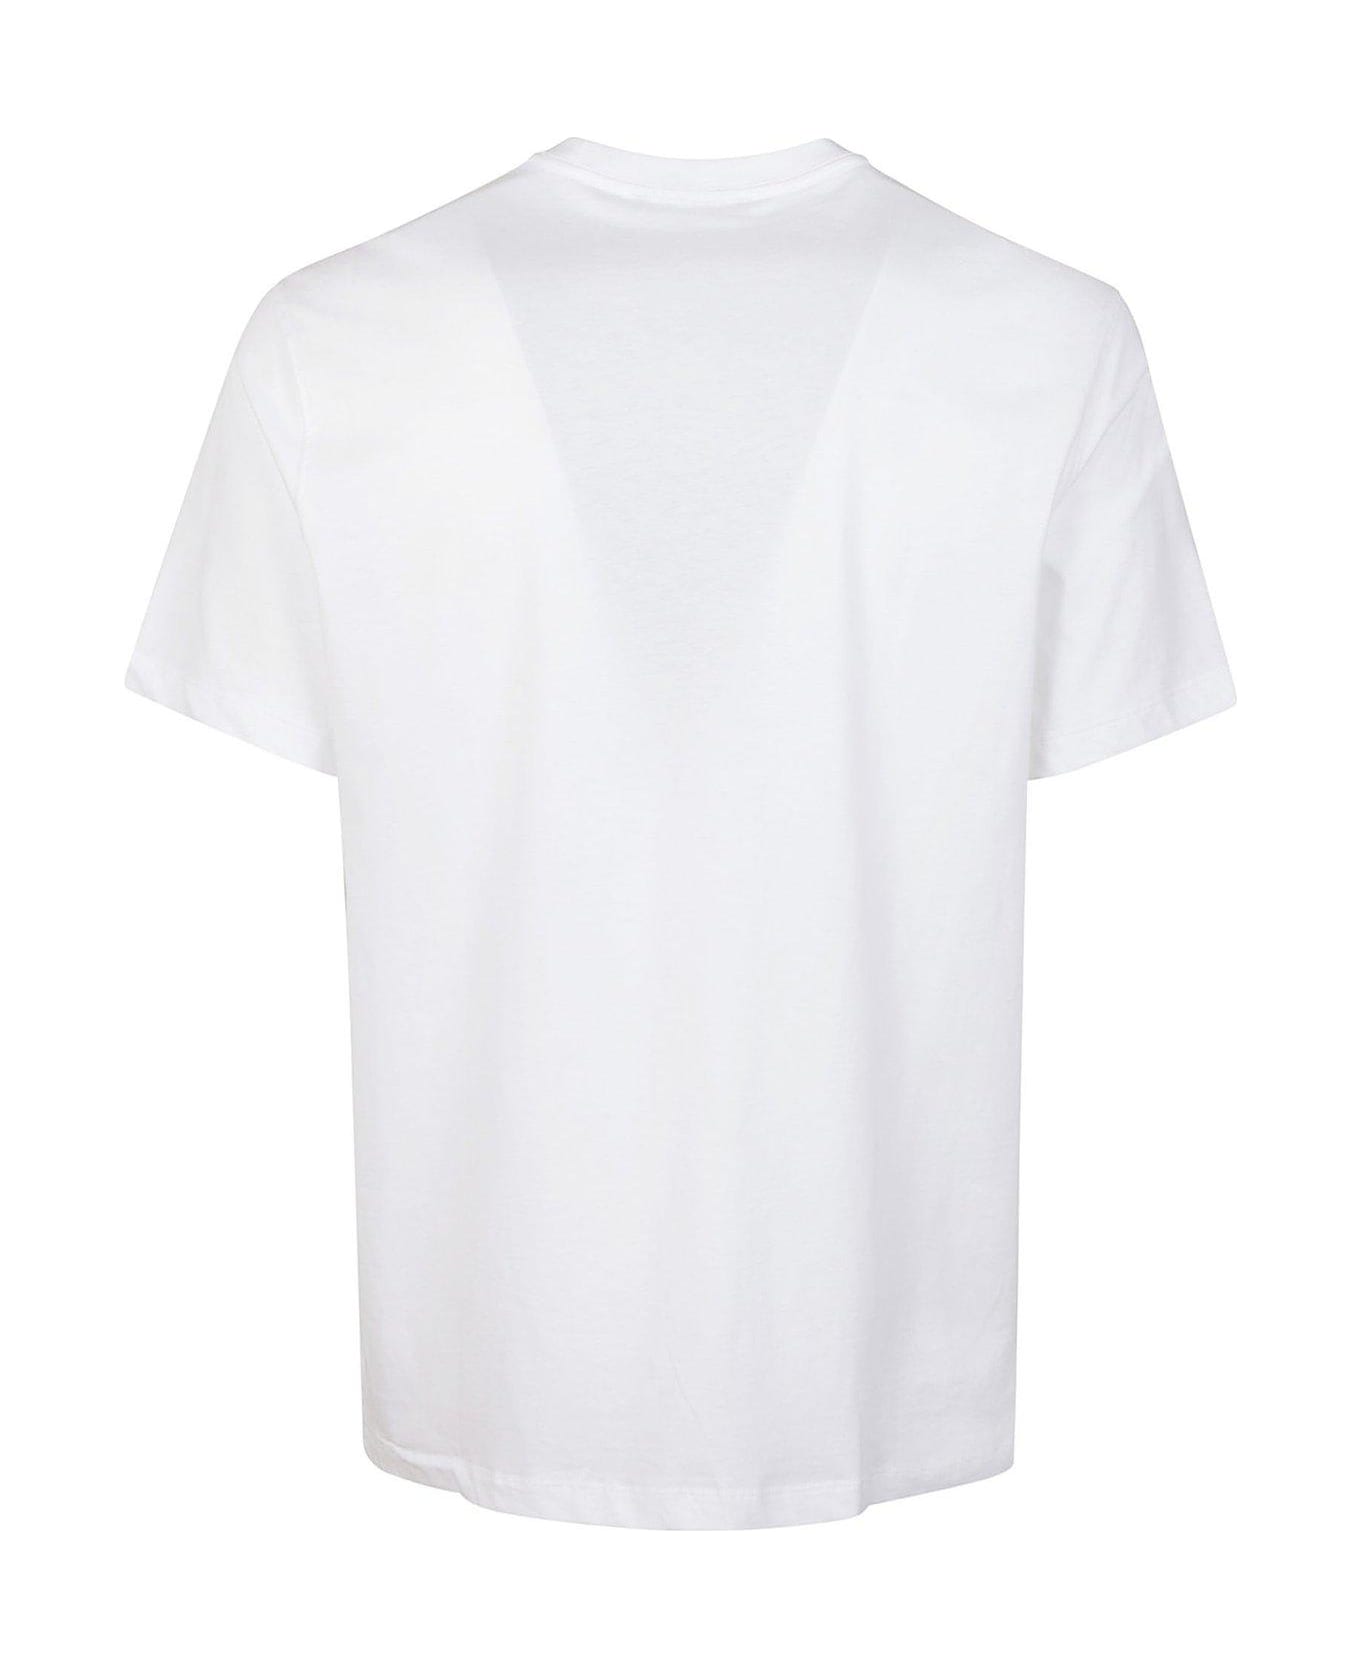 Michael Kors Graphic Printed Crewneck T-shirt - White